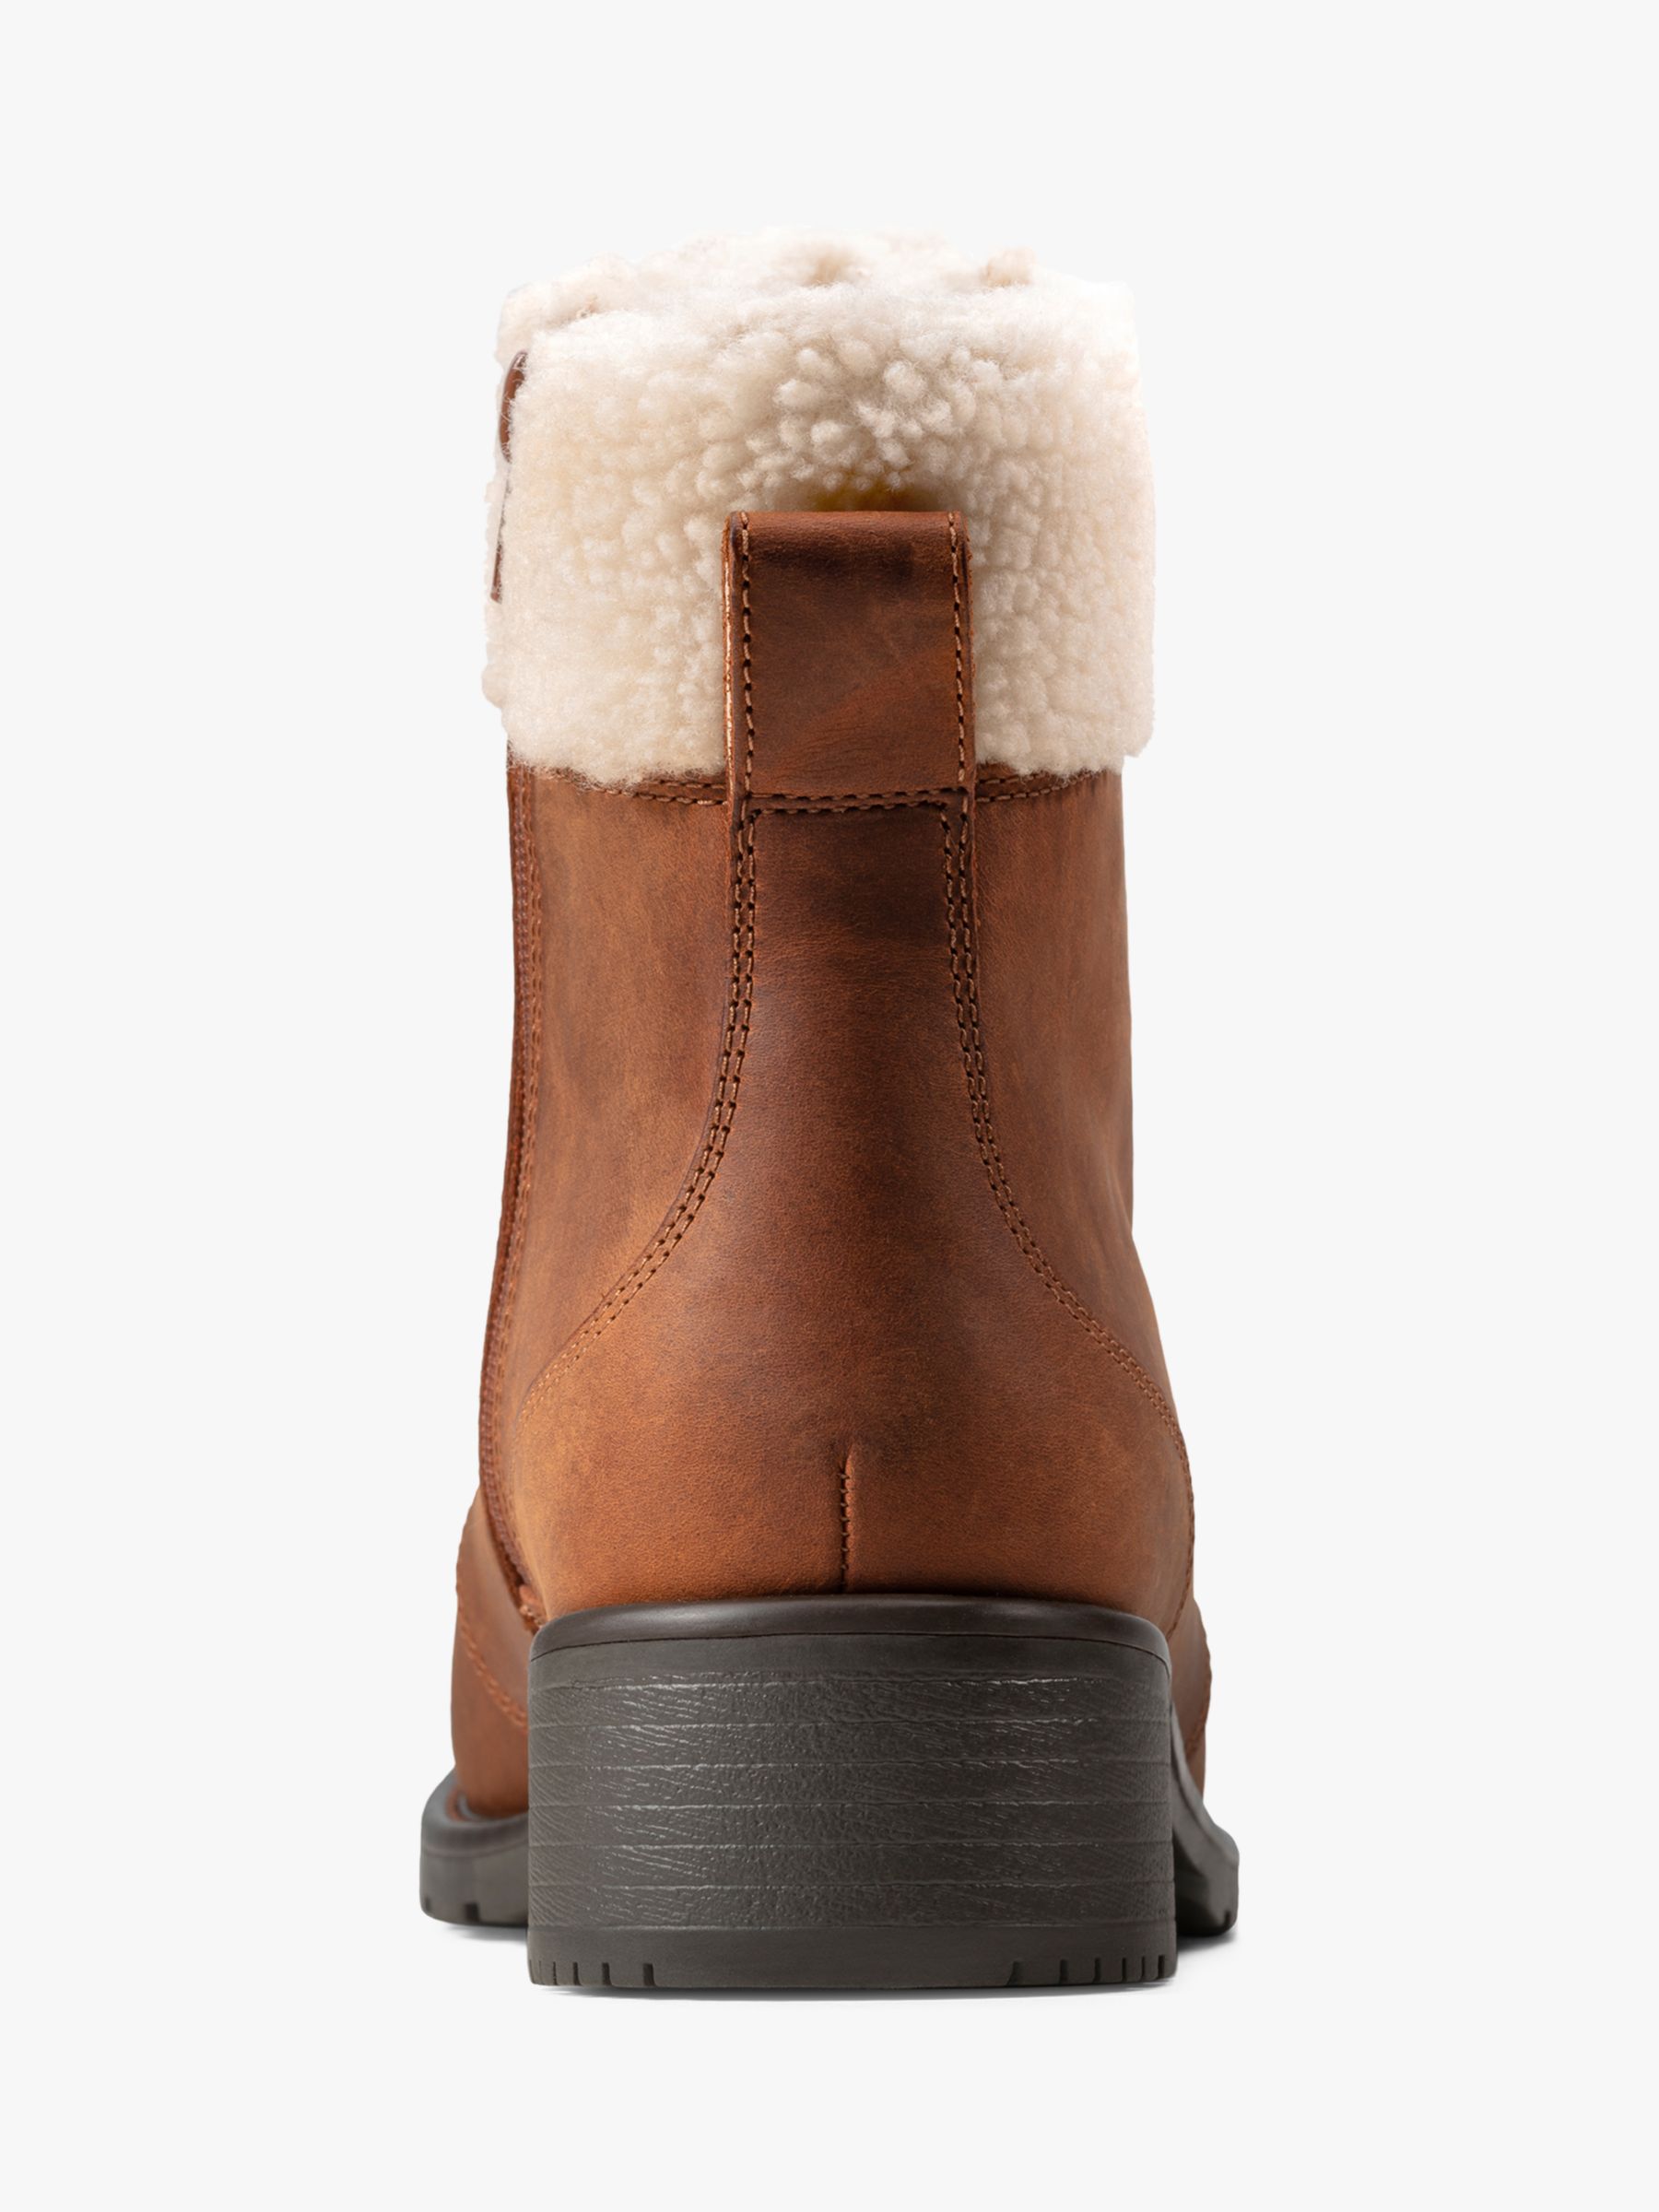 clarks fleece lined boots